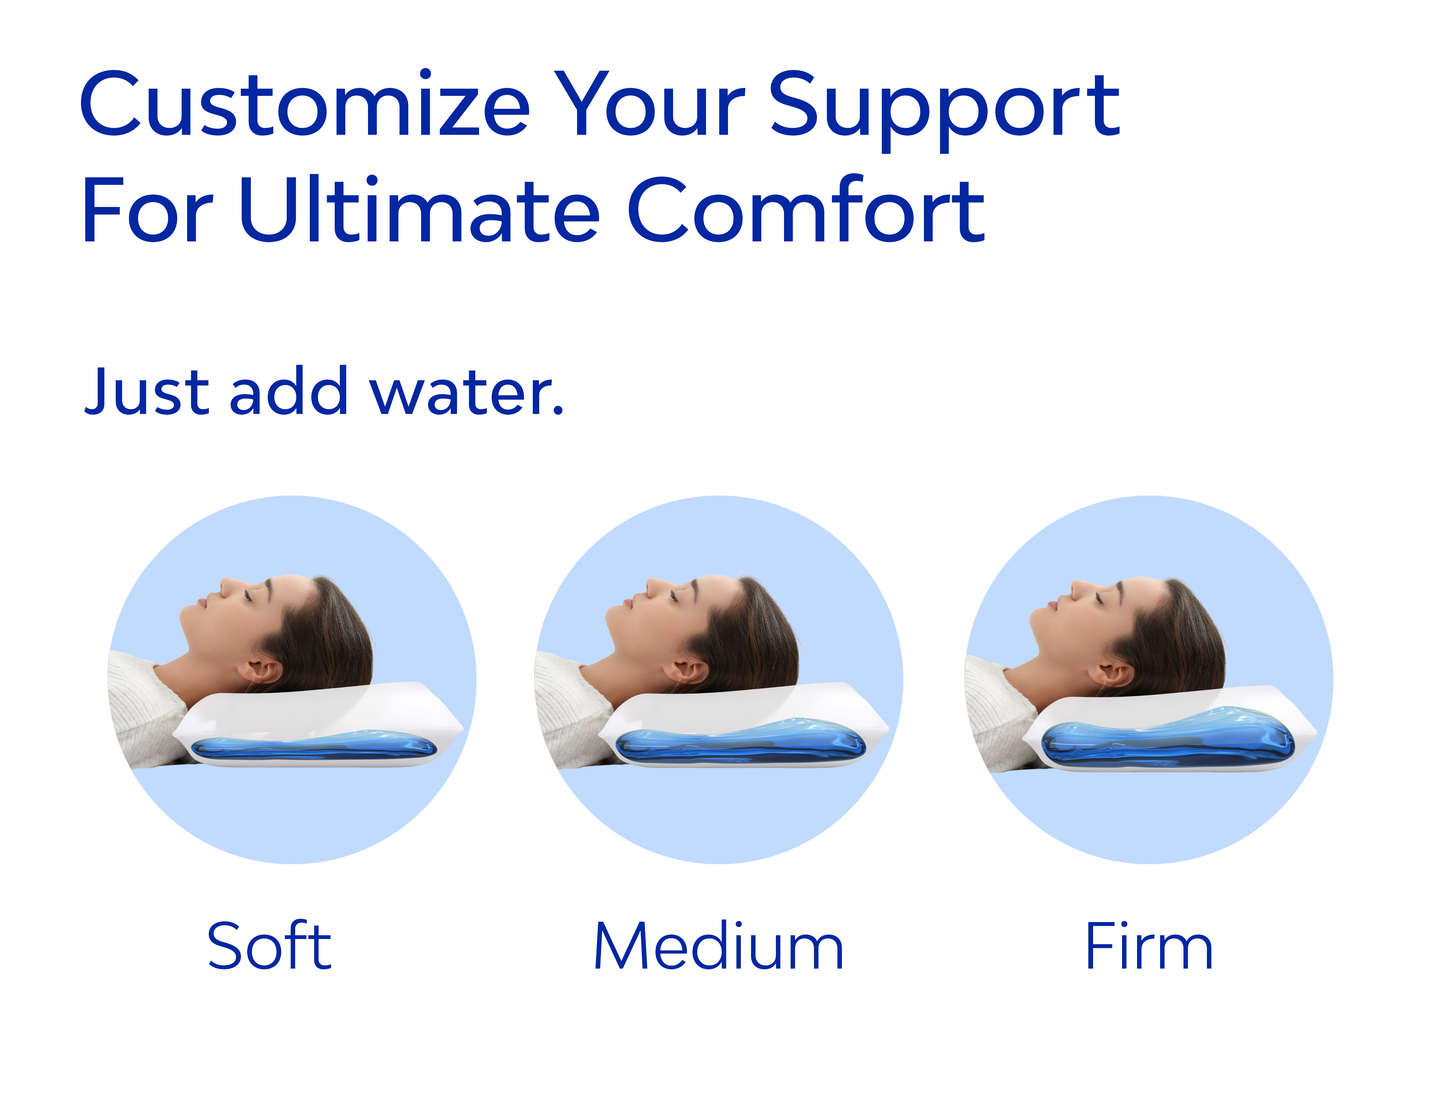 Mediflow Water Pillow - Original Down